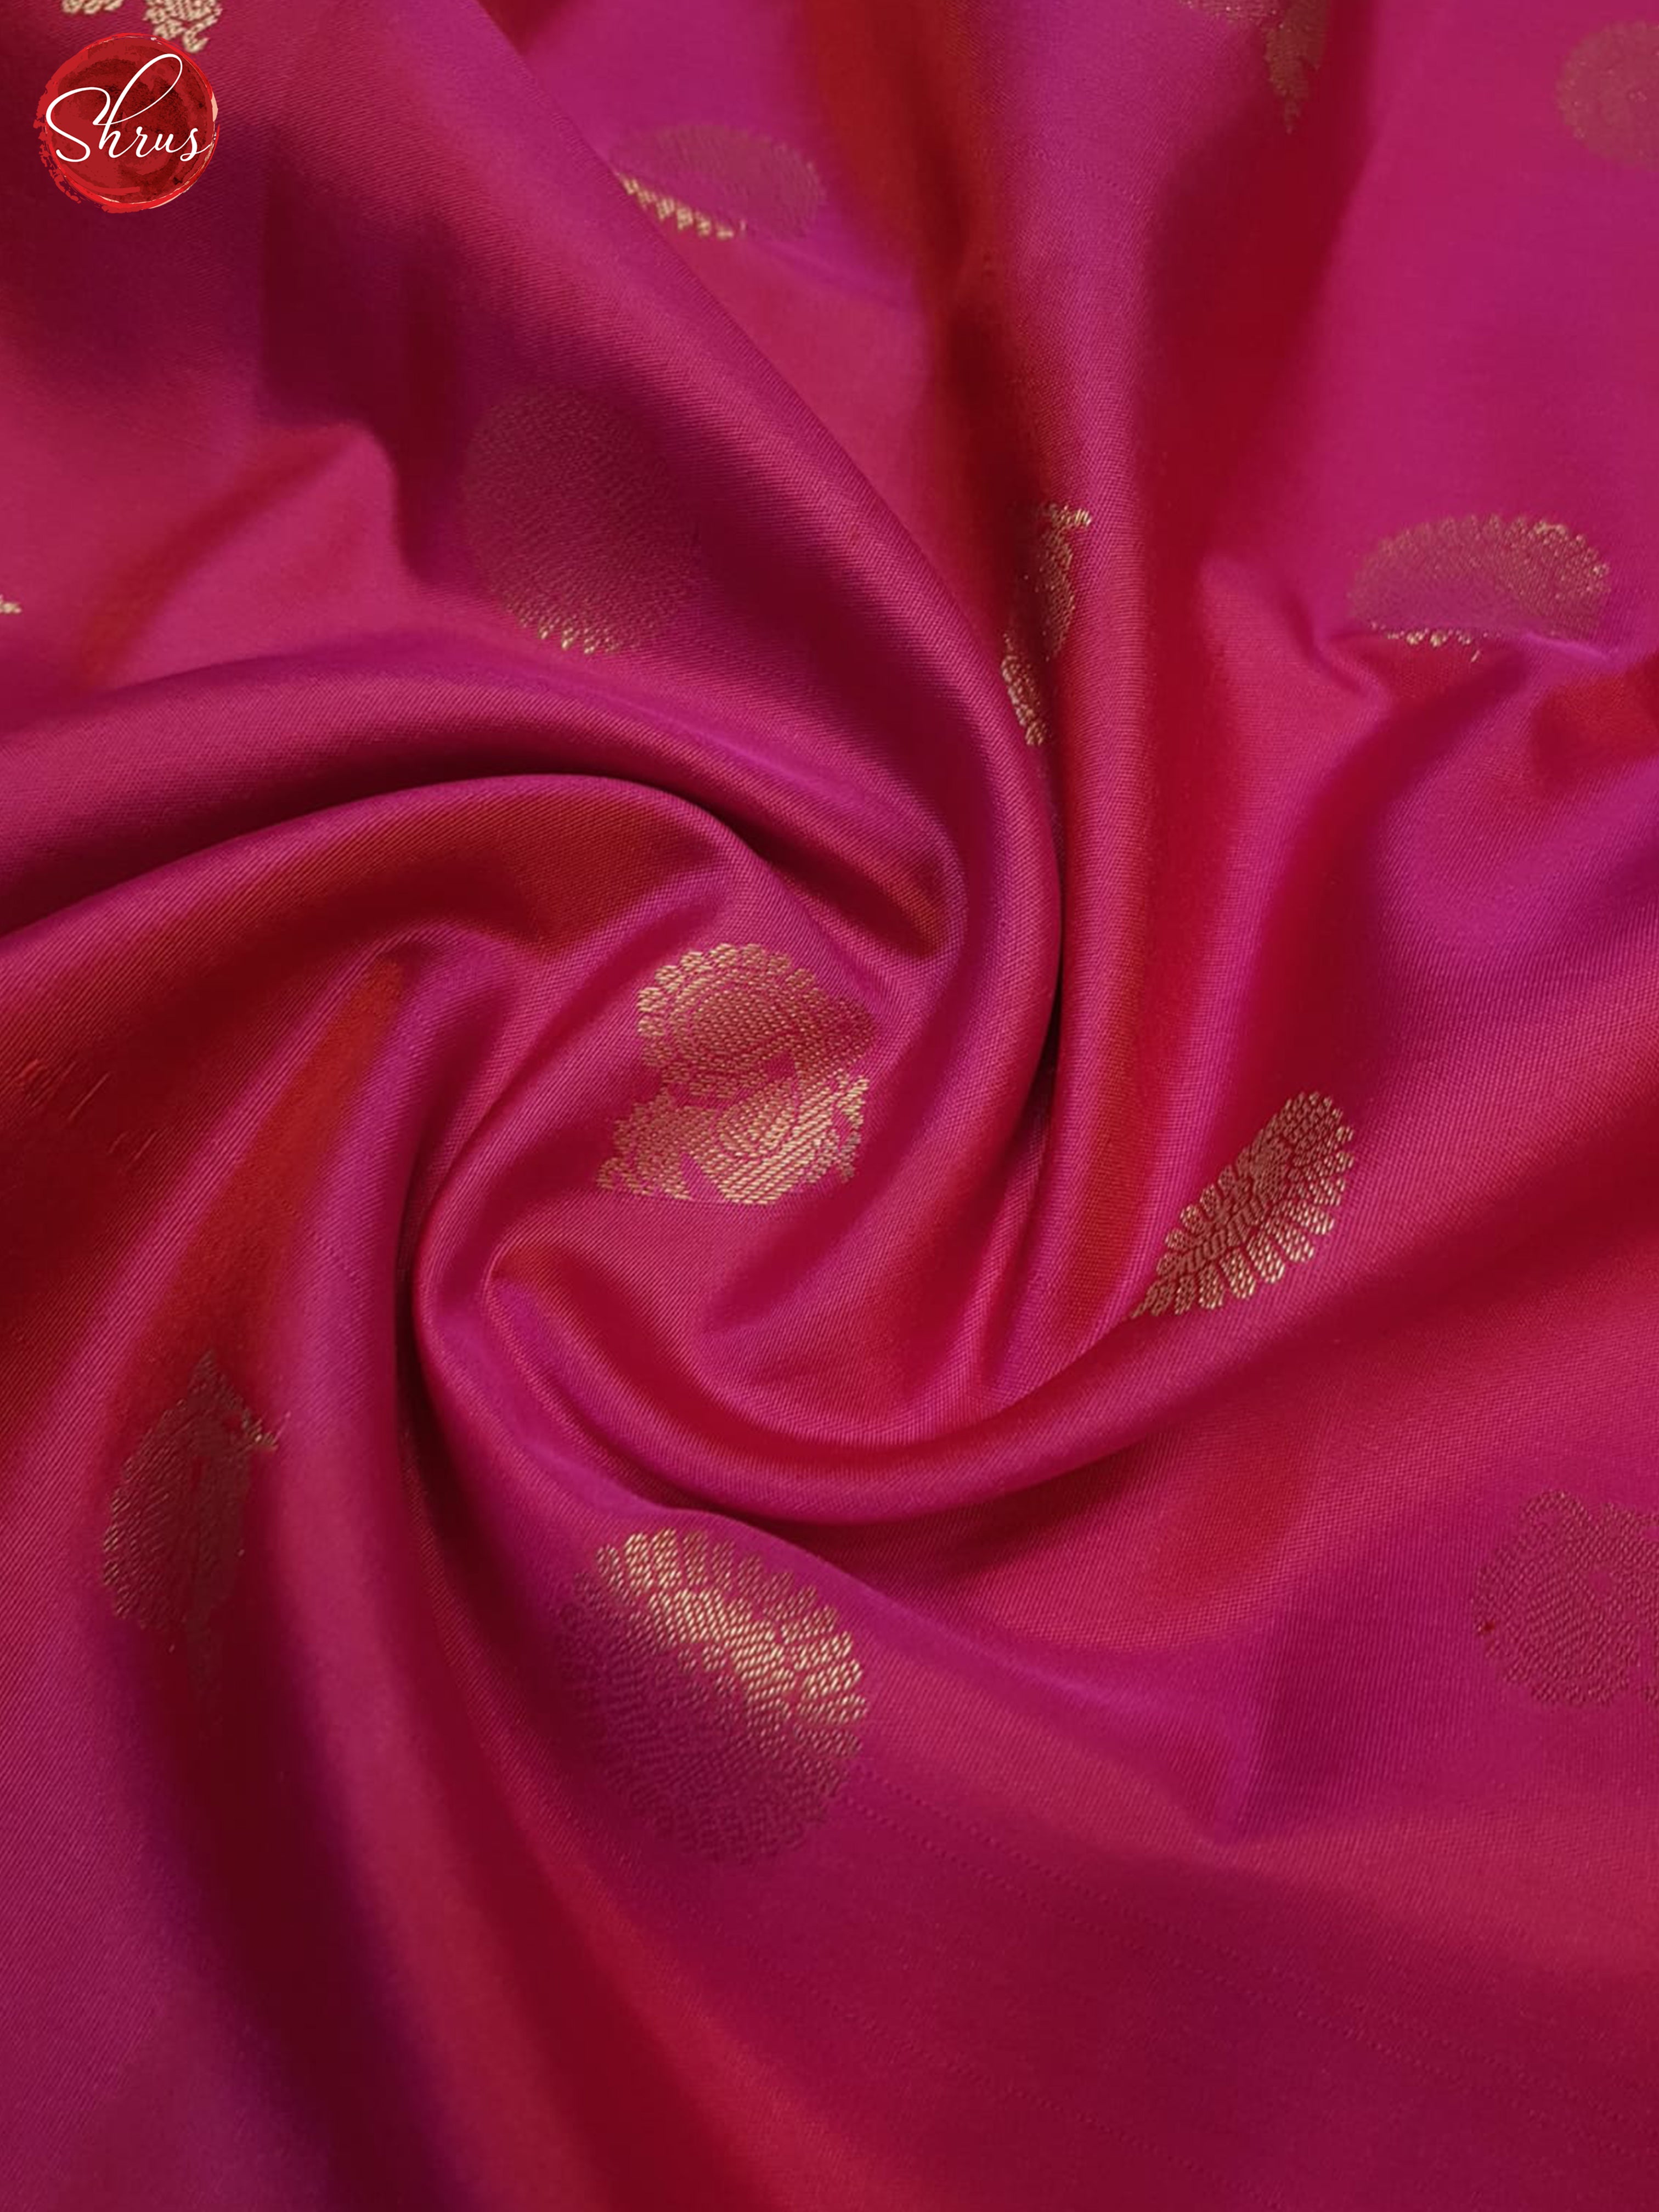 Pink And Arraku Marron - Shop on ShrusEternity.com